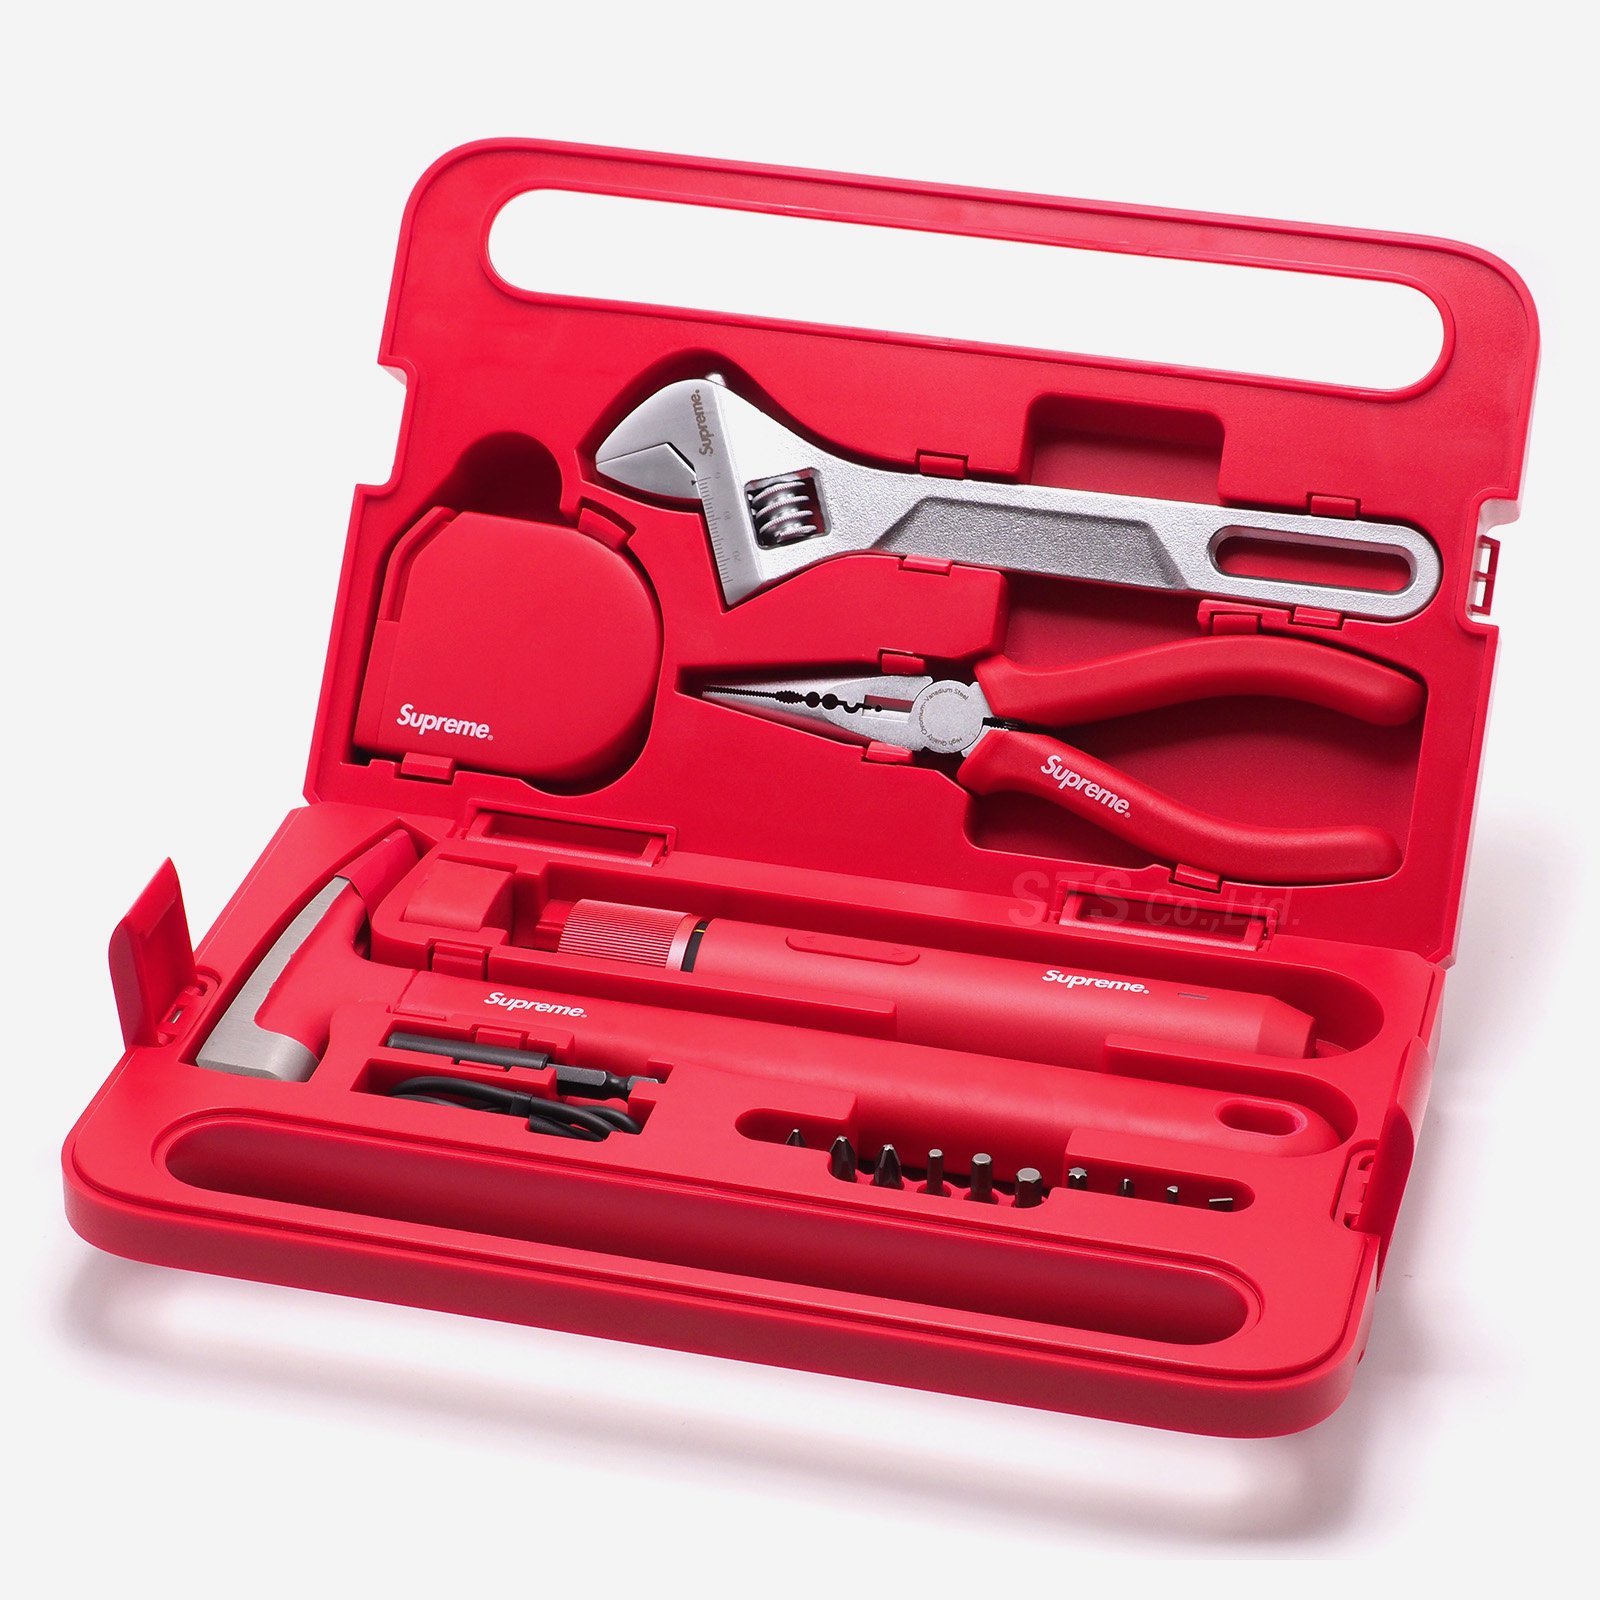 Supreme®/Hoto 5-Piece Tool Set Red